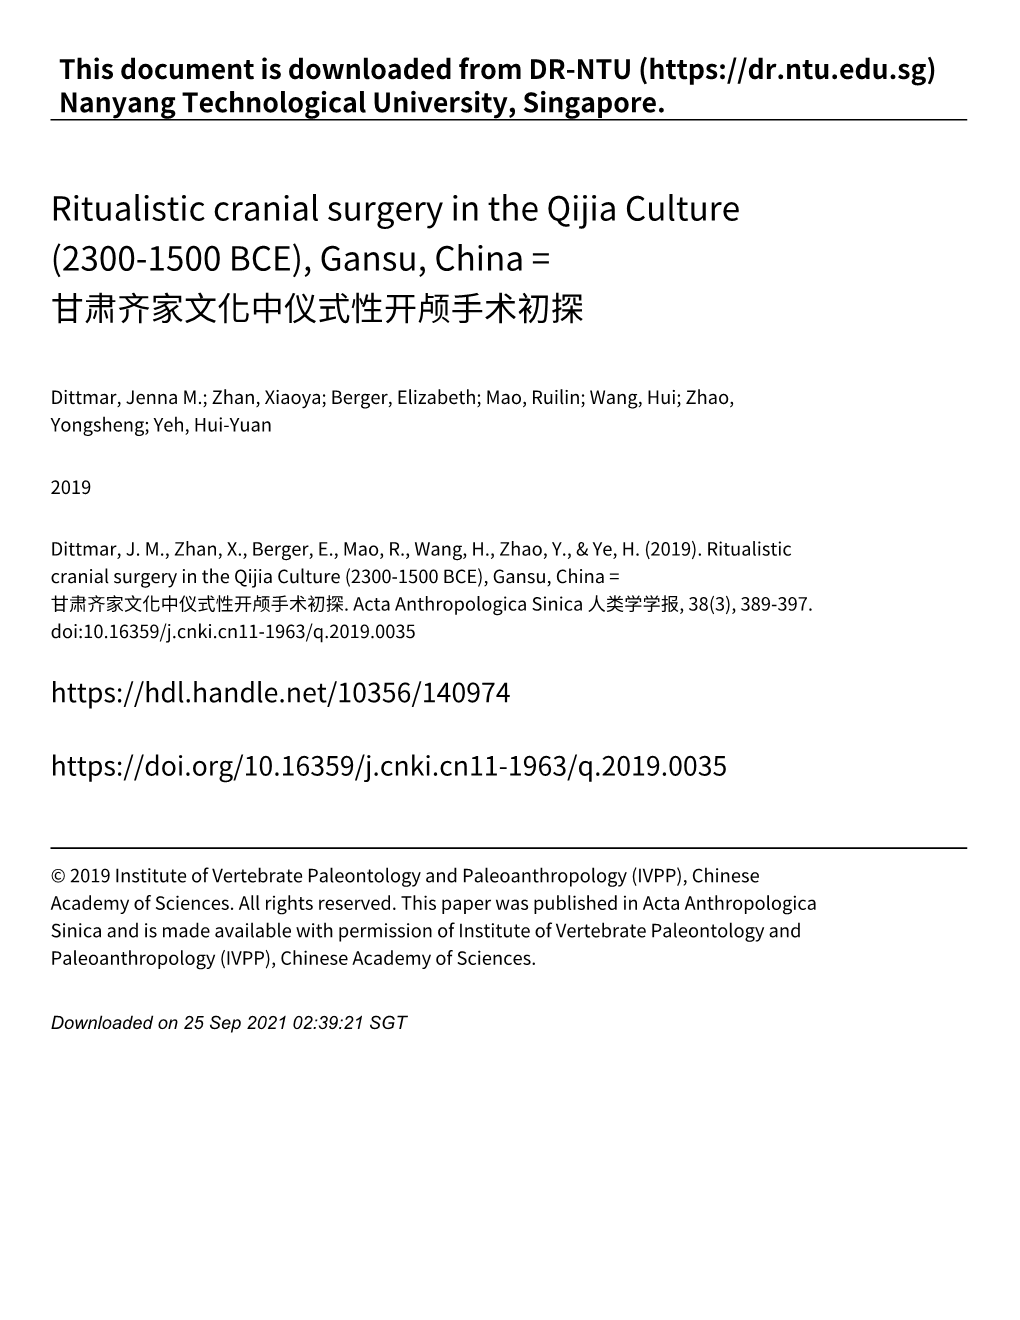 Ritualistic Cranial Surgery in the Qijia Culture (2300‑1500 BCE), Gansu, China = 甘肃齐家文化中仪式性开颅手术初探